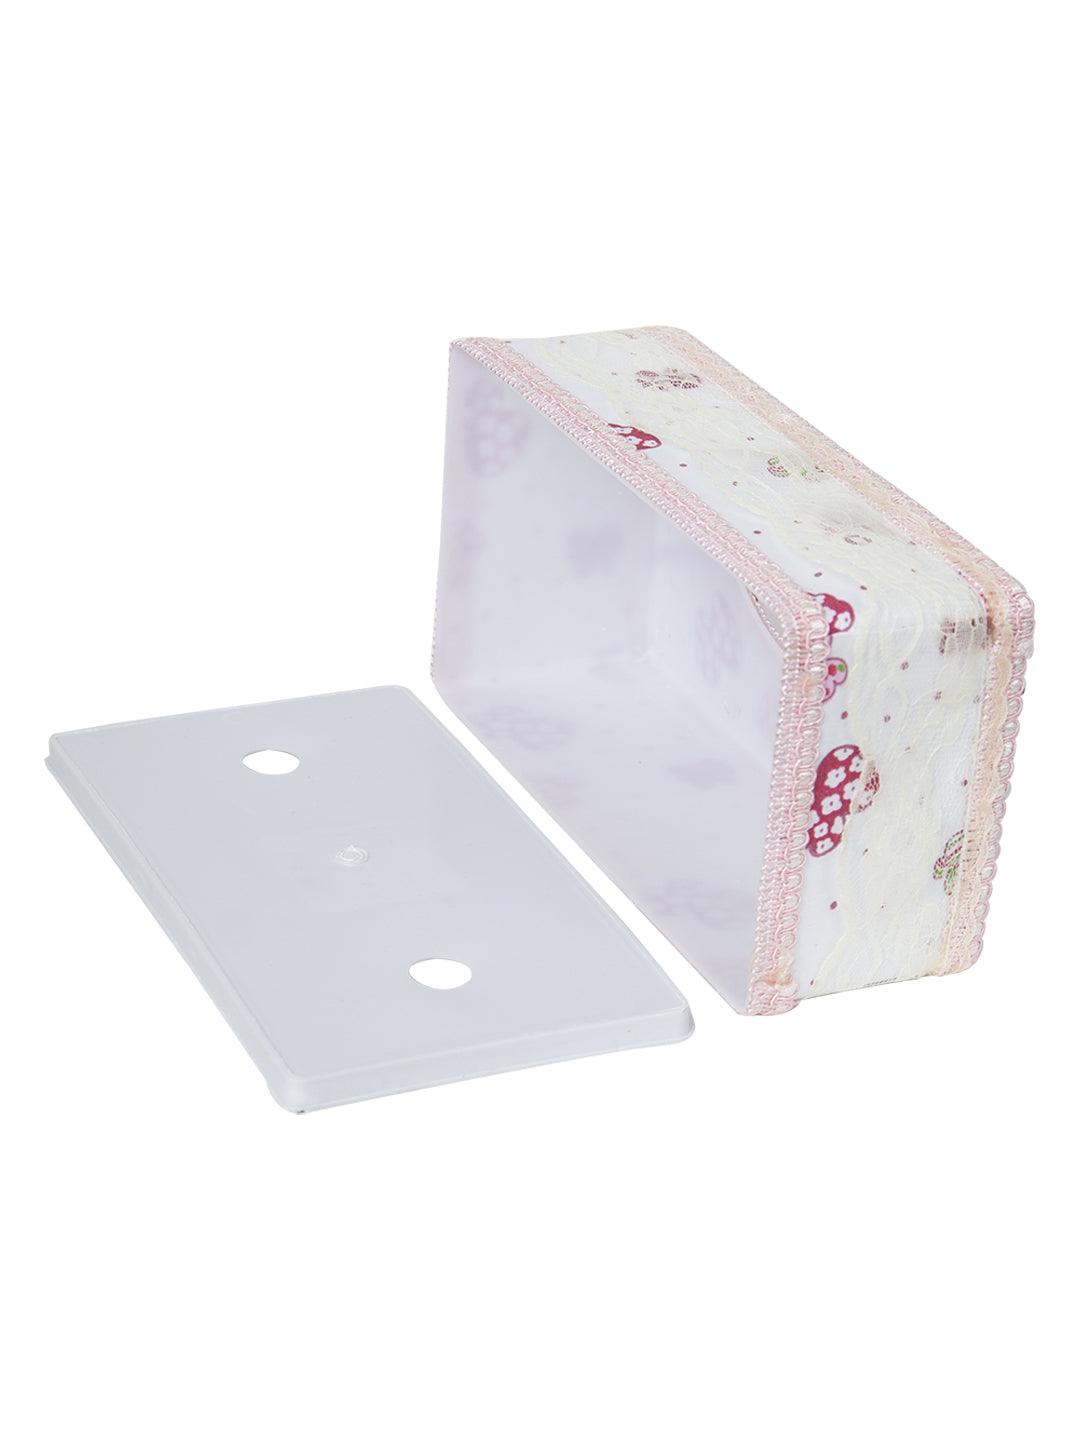 White & Pink Tissue Box - 22.4 X 12.4 X 8.3Cm - MARKET 99